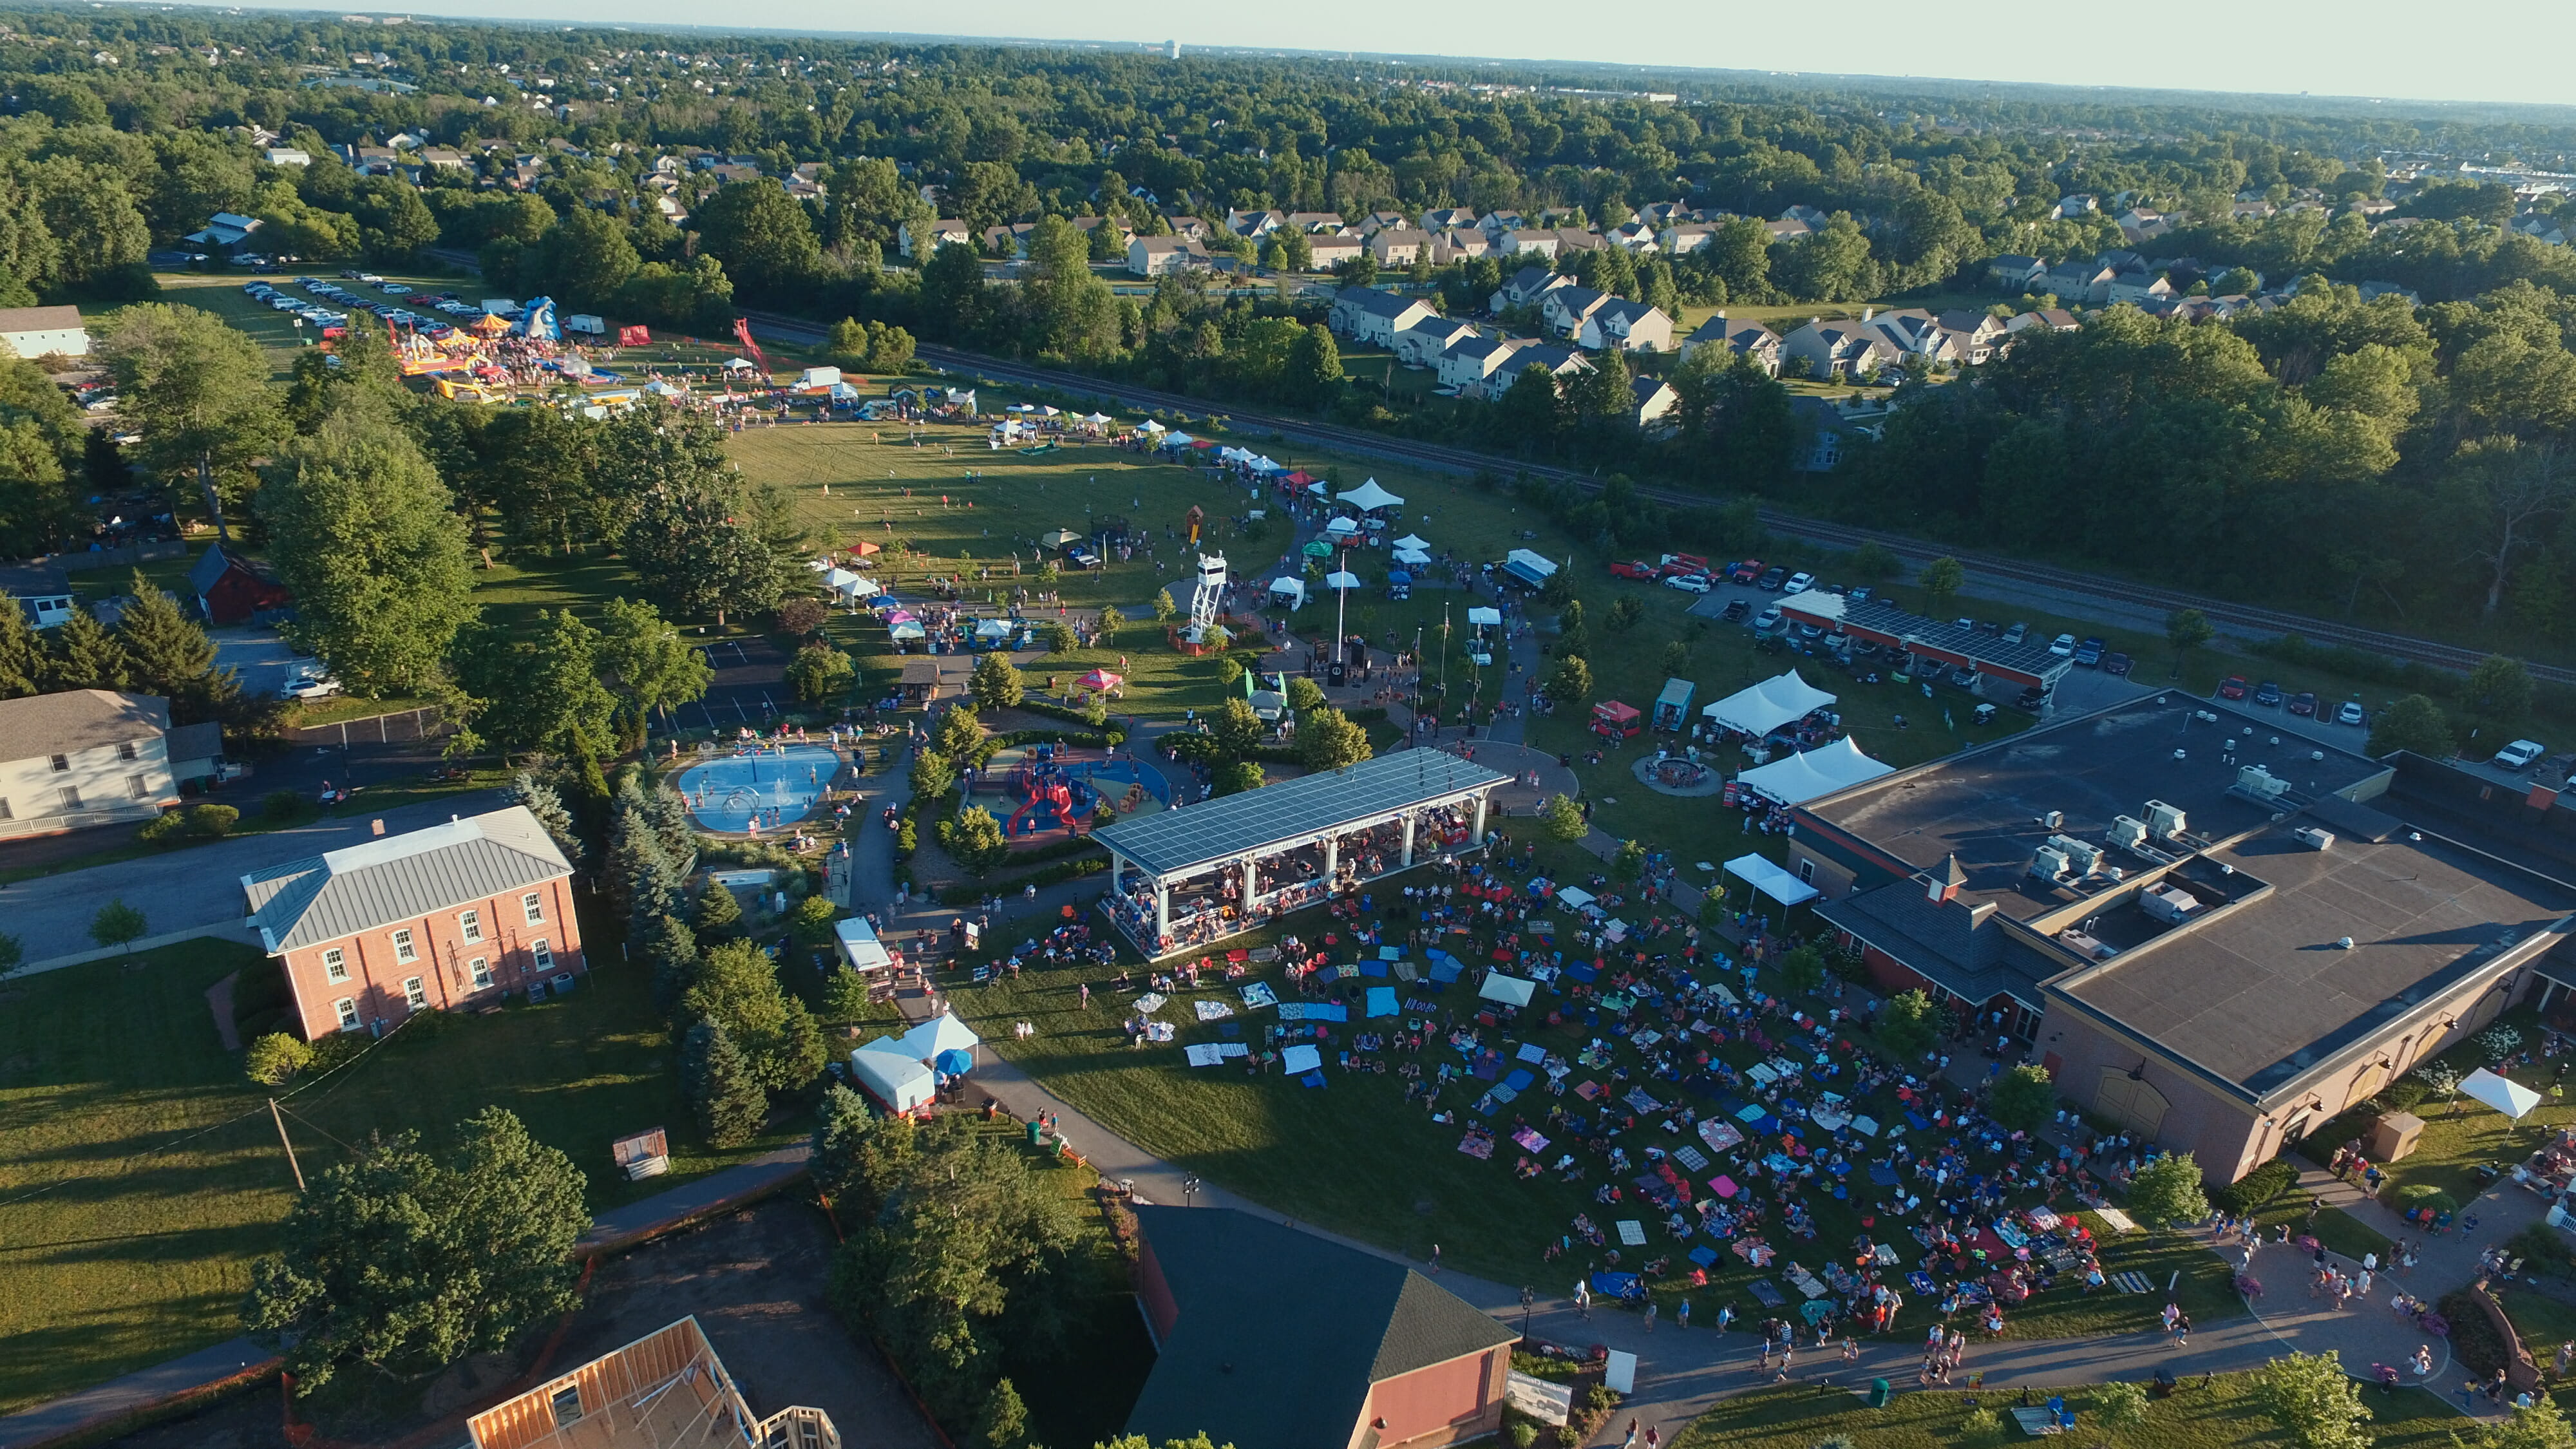 City of Powell, Ohio Powell Festival celebrates 20th anniversary